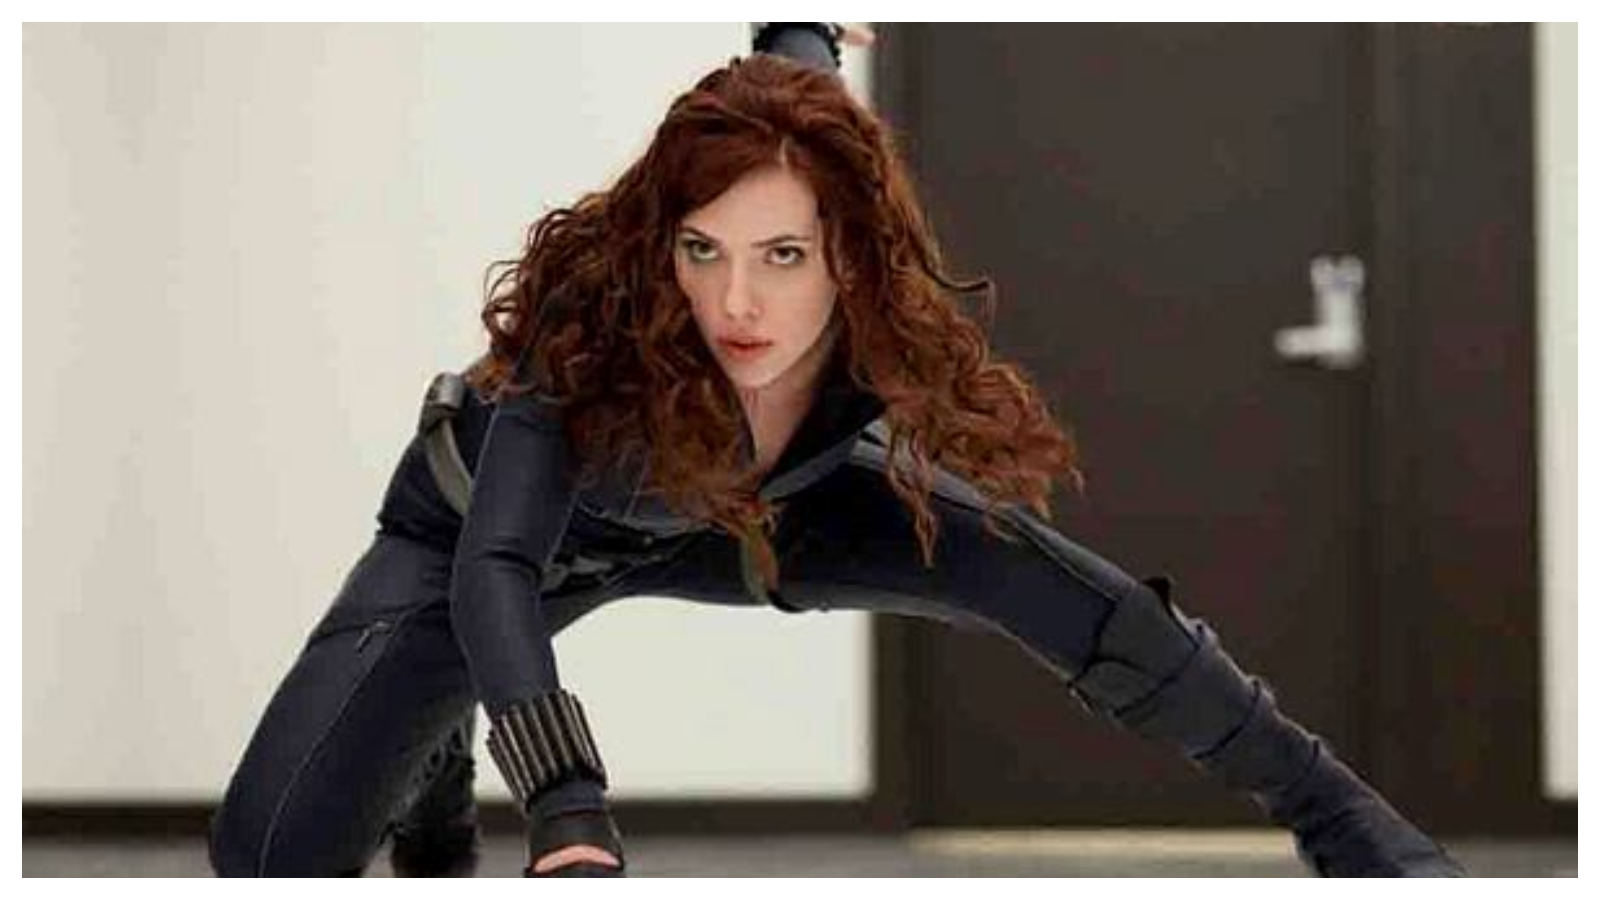 Scarlett Johansson: Black Widow Return to the MCU Would Be a